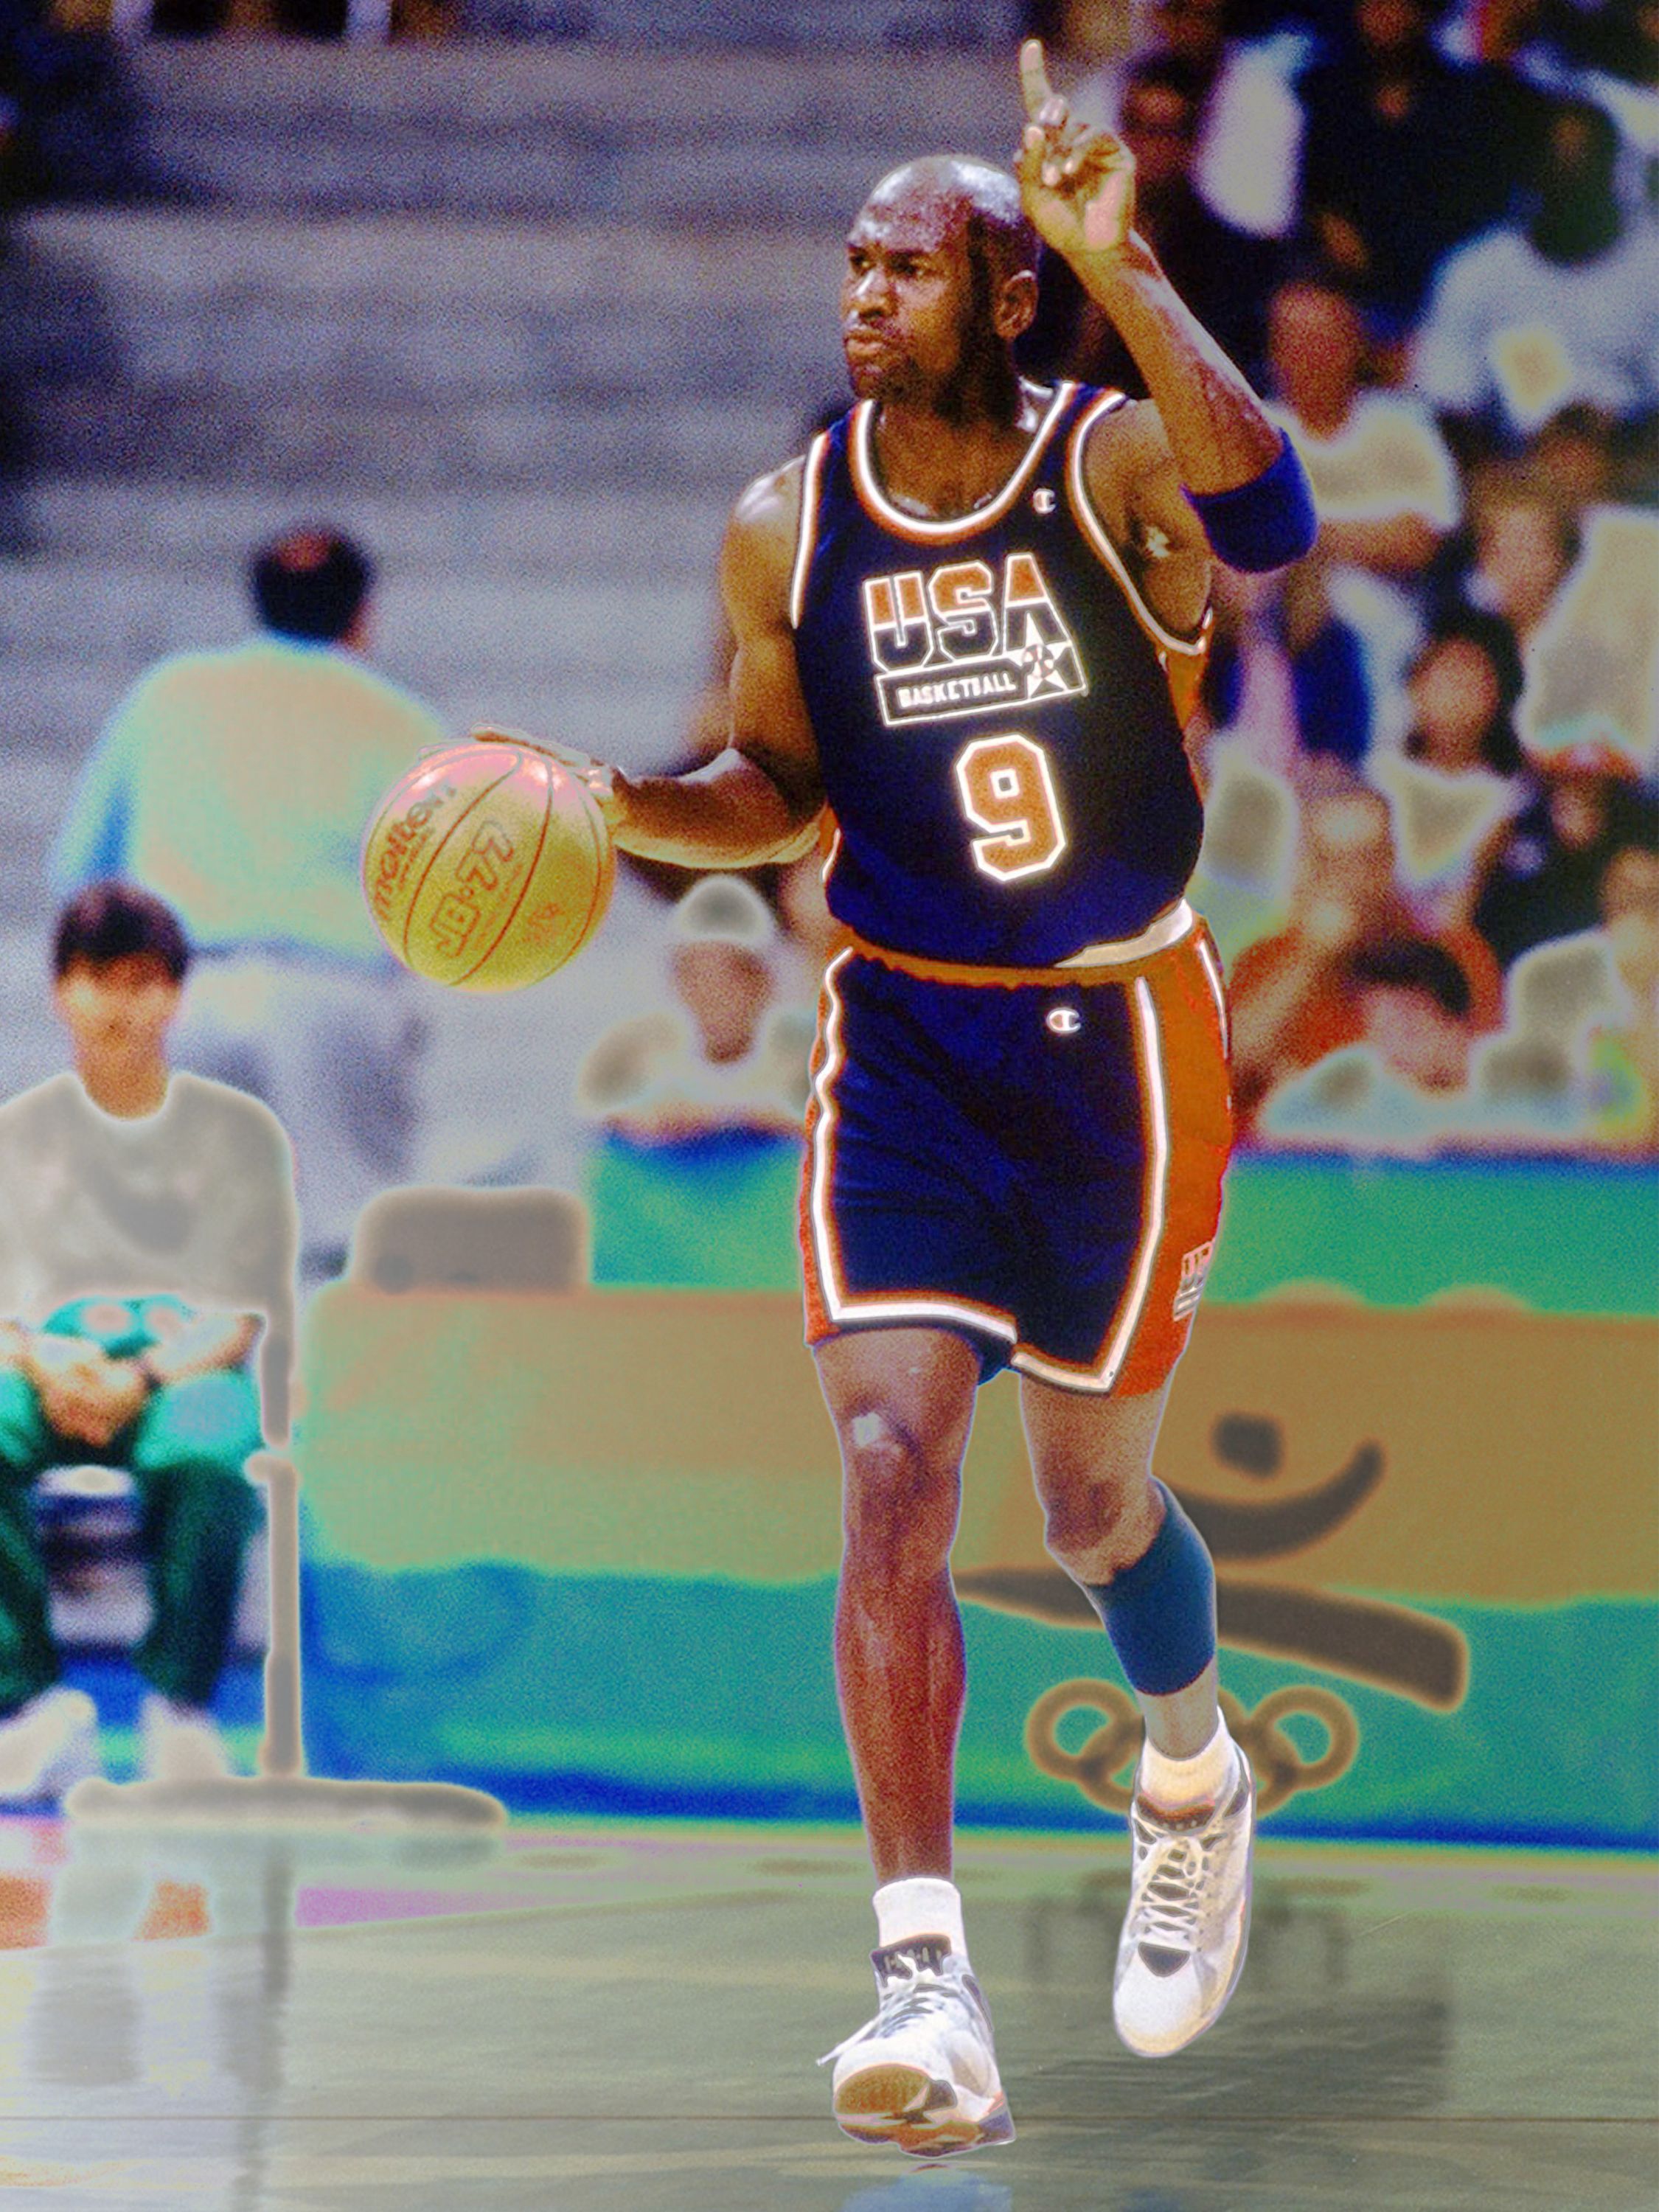 How an Iconic Michael Jordan Photo Immortalized This Air Jordan 1